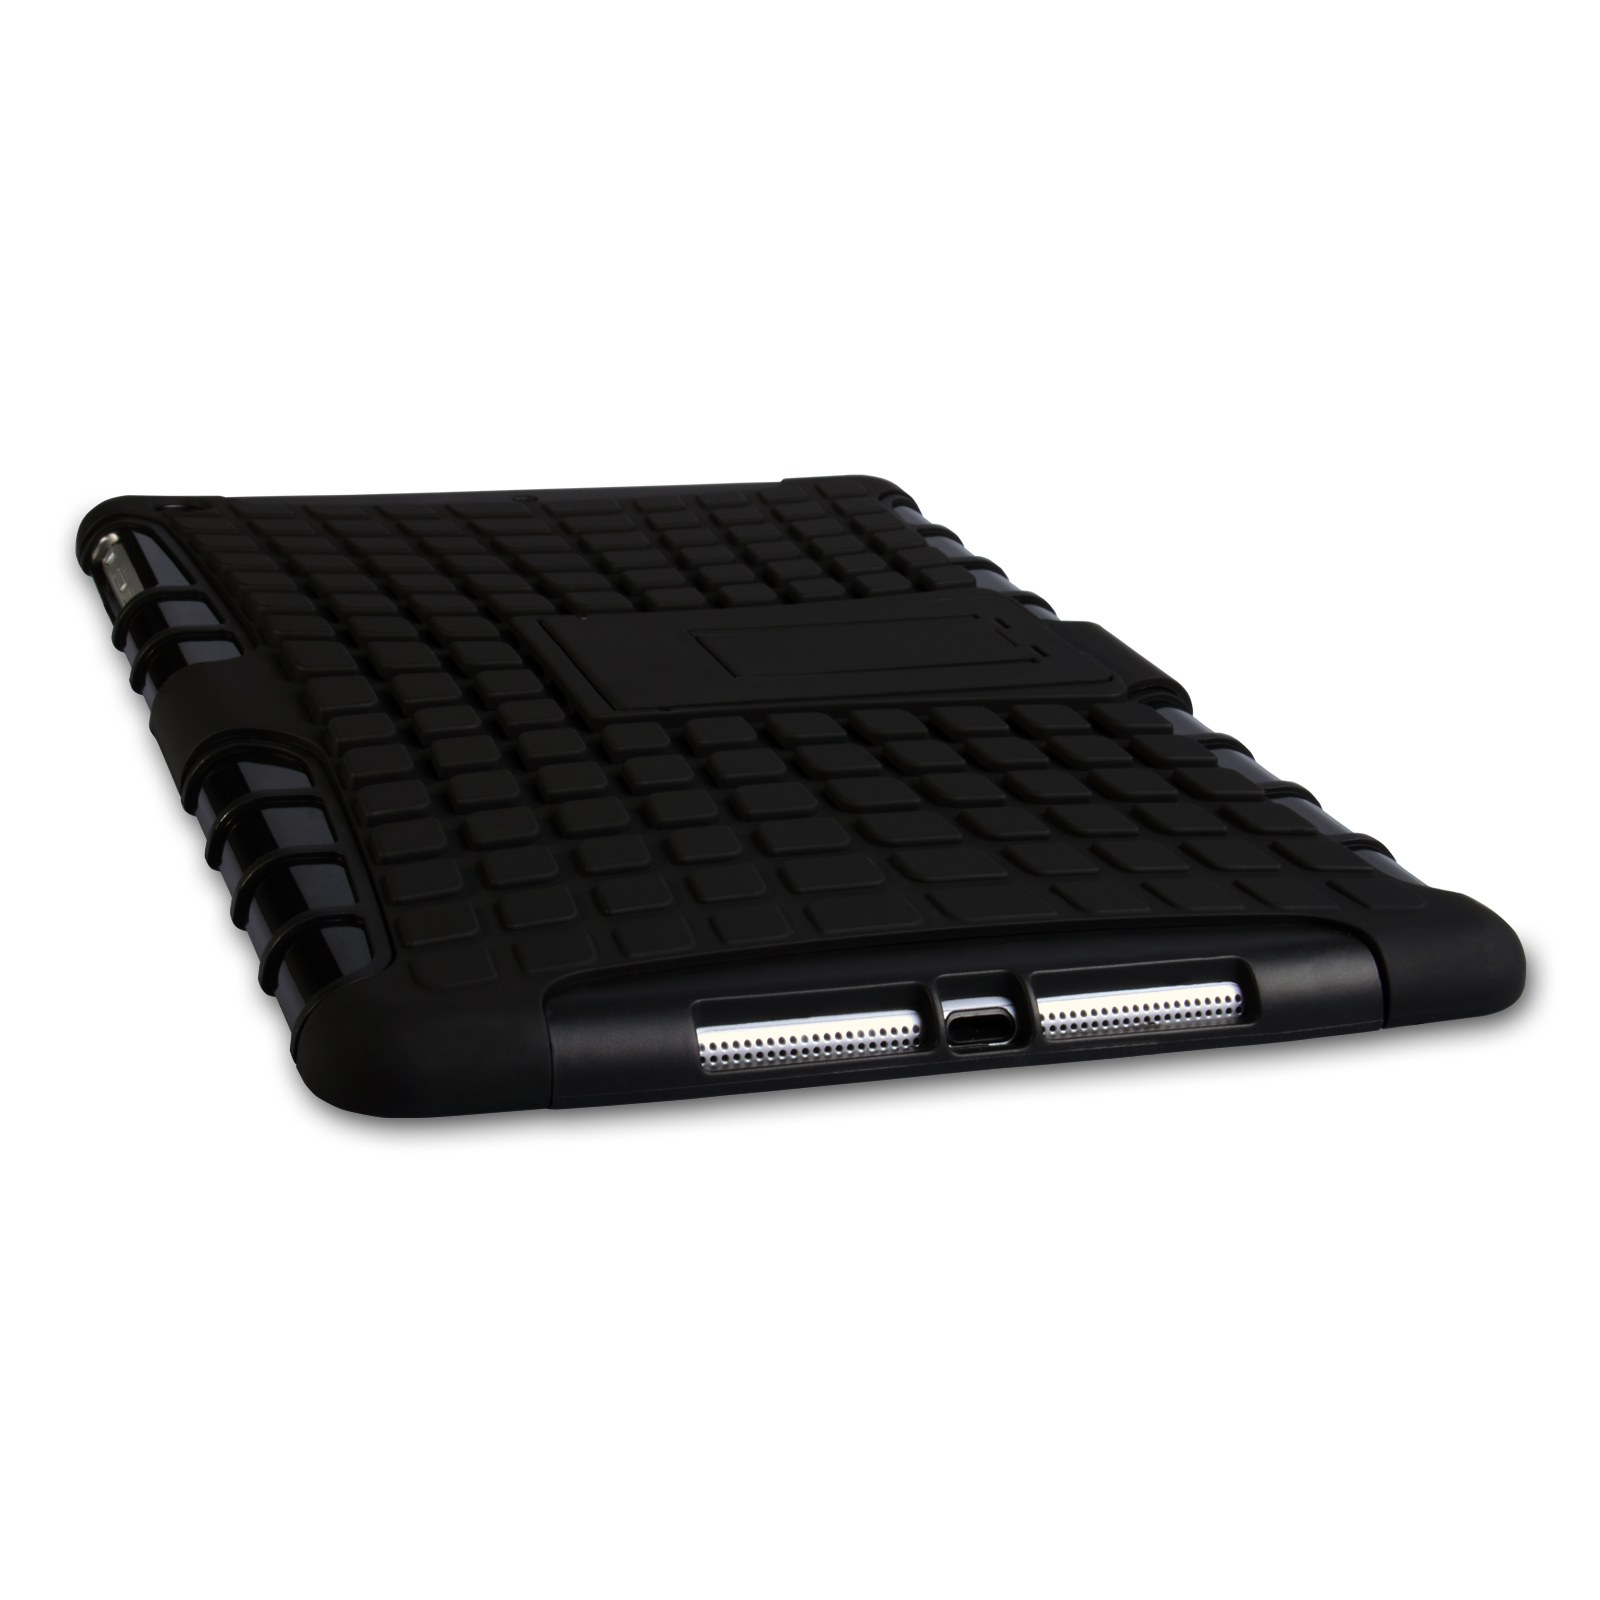 Caseflex iPad 2, 3, 4 Tough Stand Cover - Black